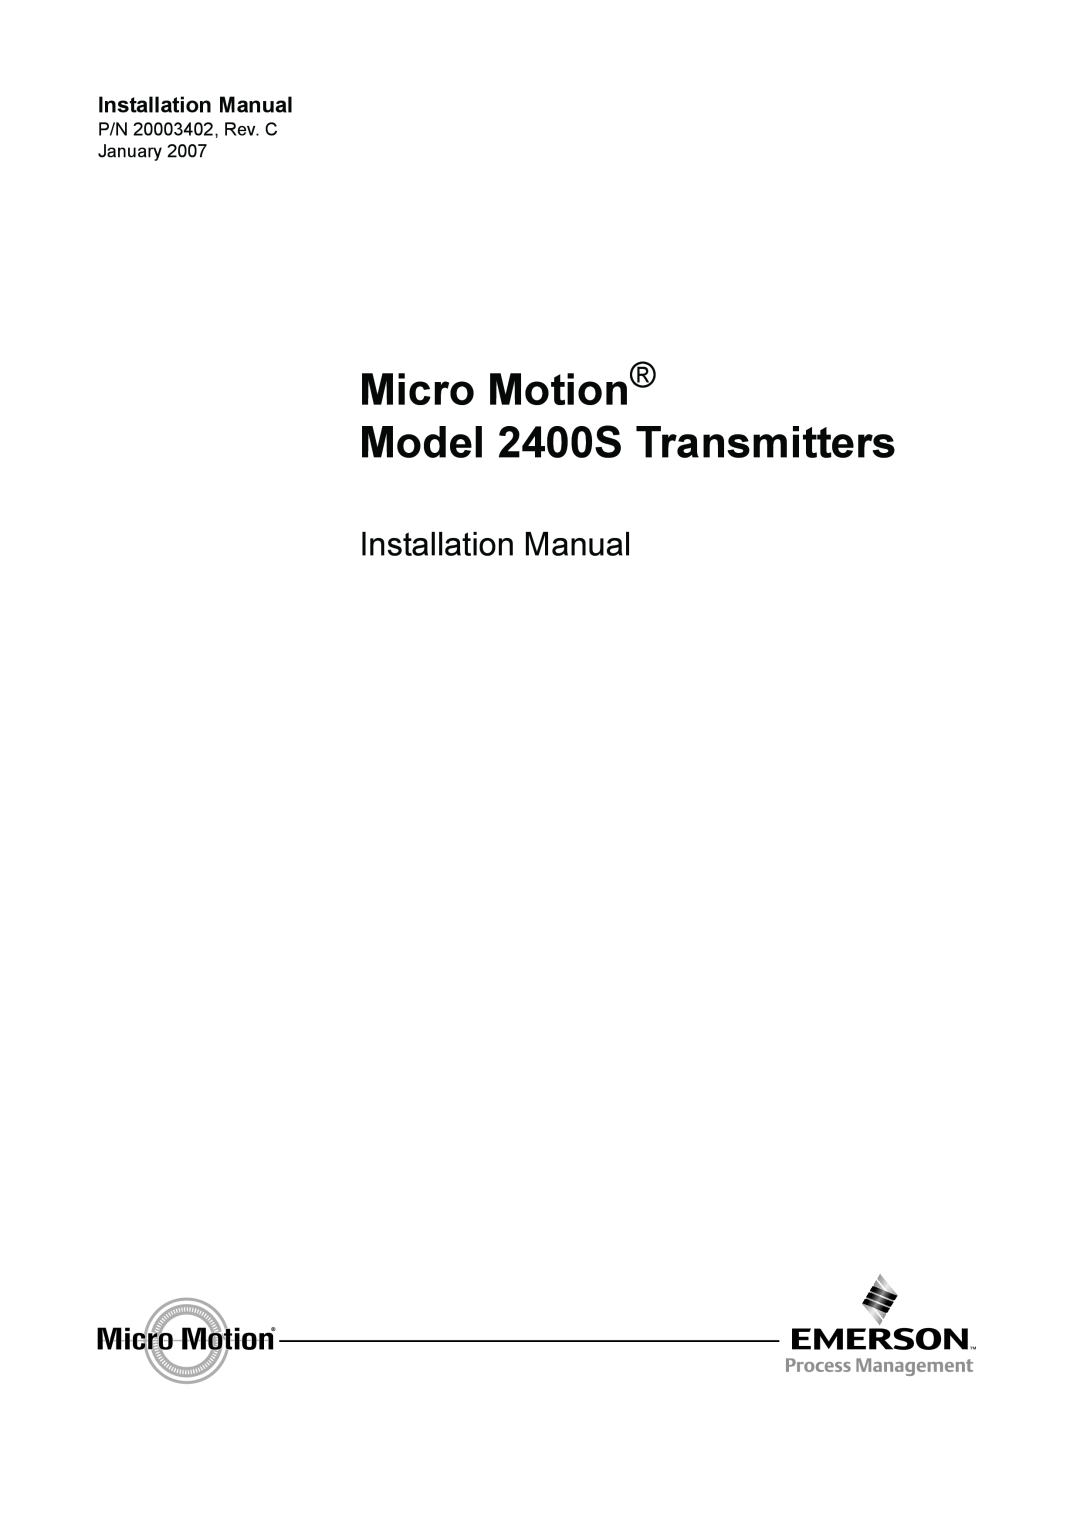 Emerson installation manual Micro Motion Model 2400S Transmitters, Installation Manual, P/N 20003402, Rev. C January 